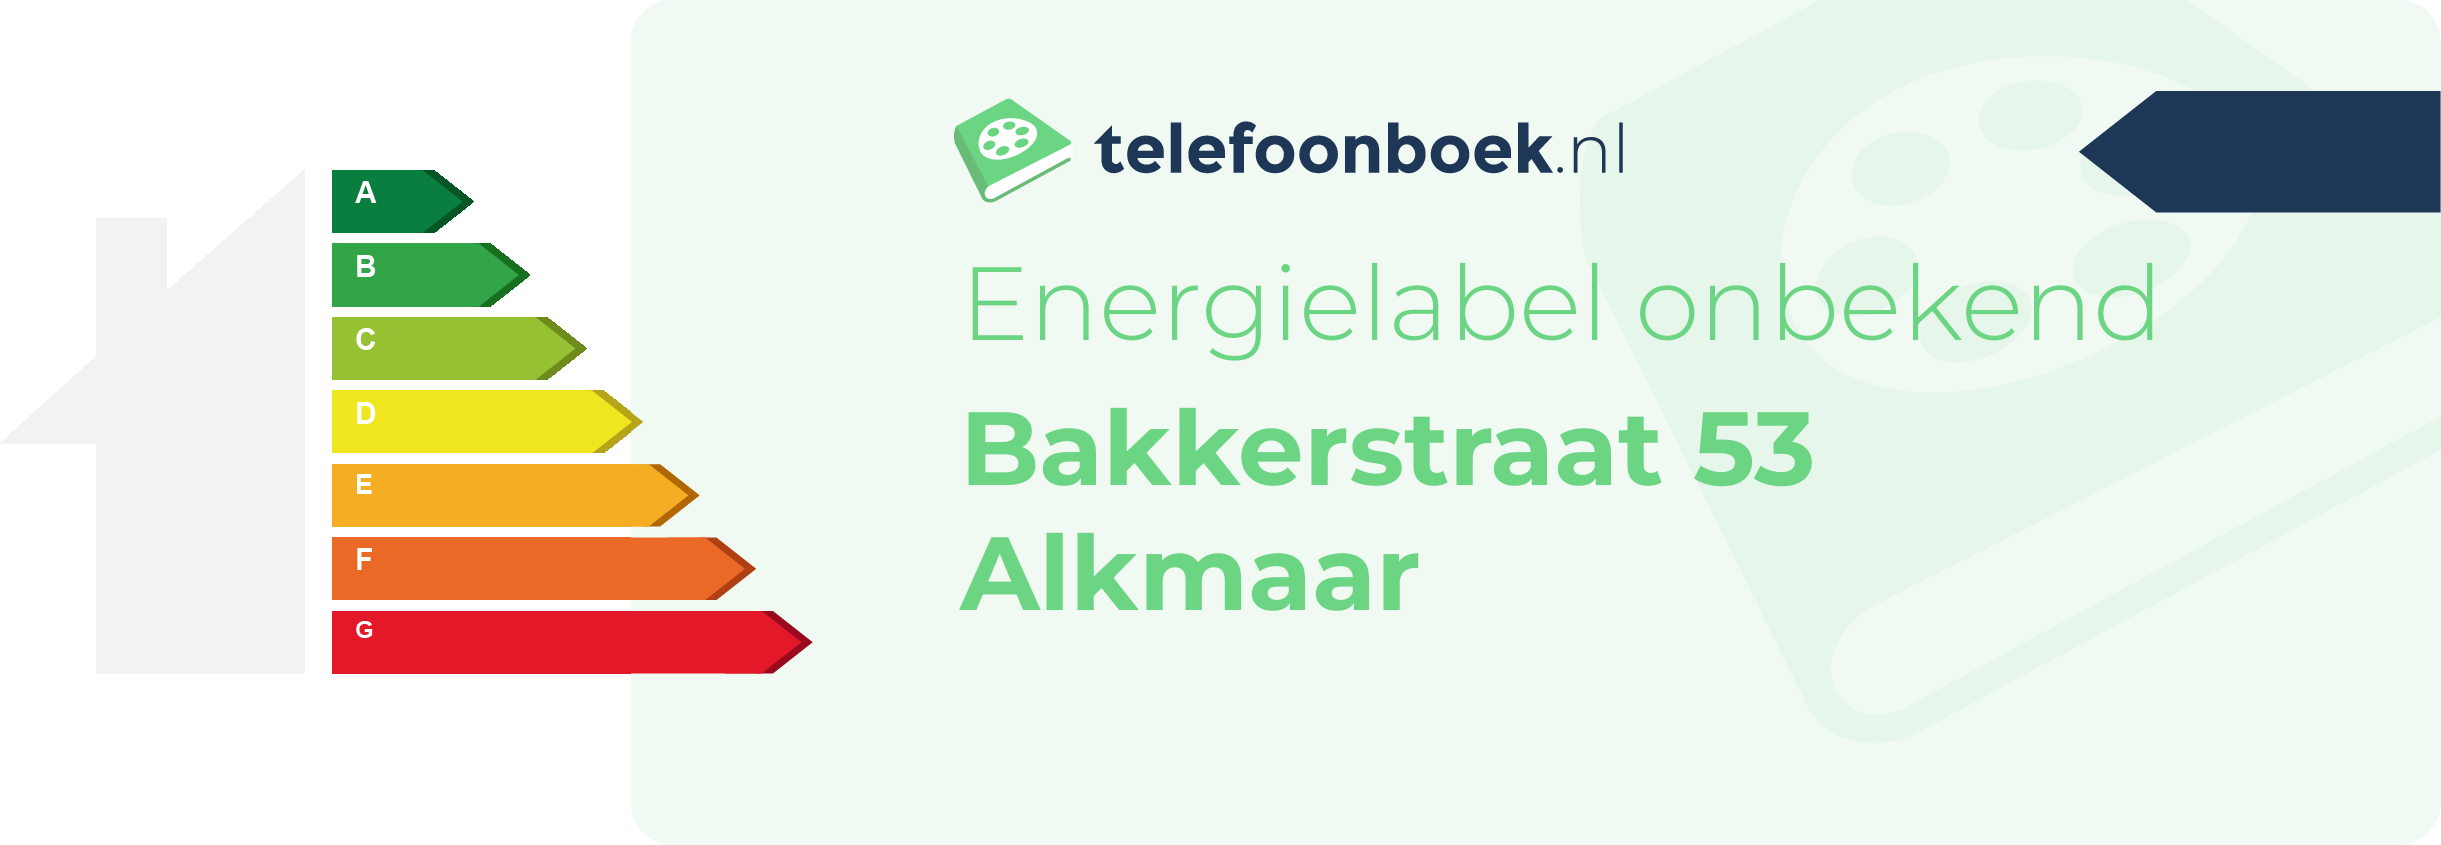 Energielabel Bakkerstraat 53 Alkmaar